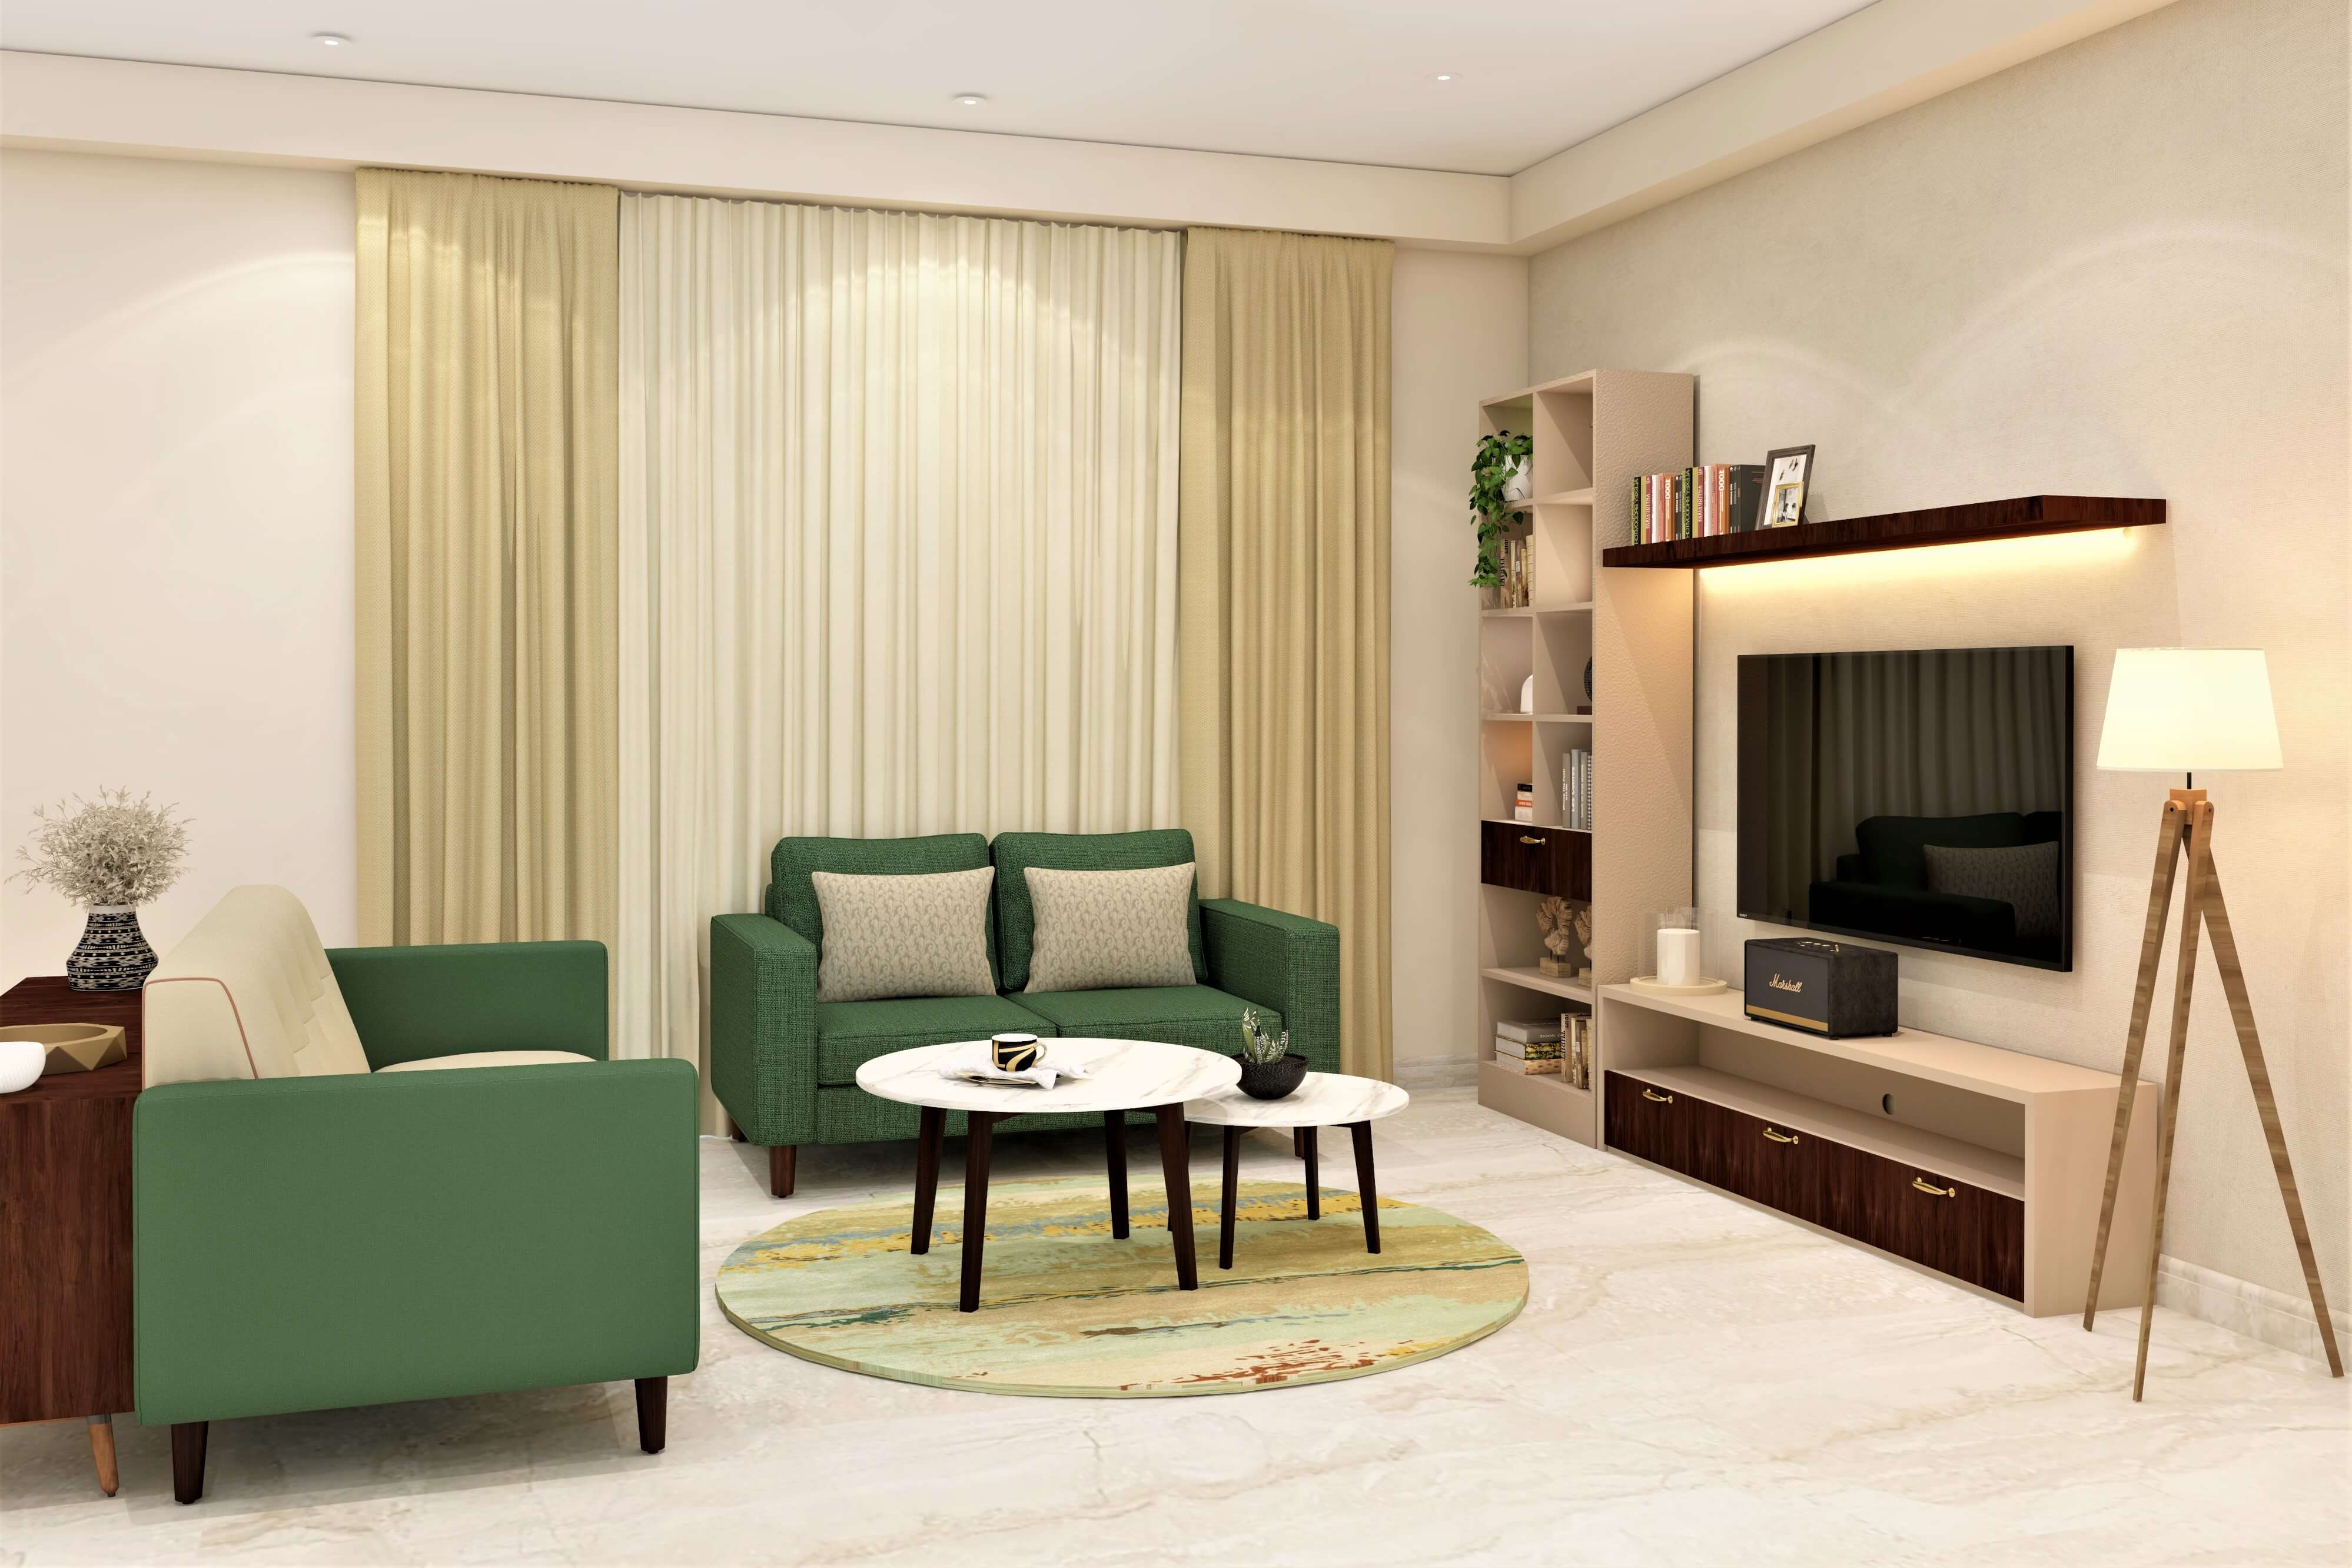 Simple and elegant living room design - Beautiful Homes